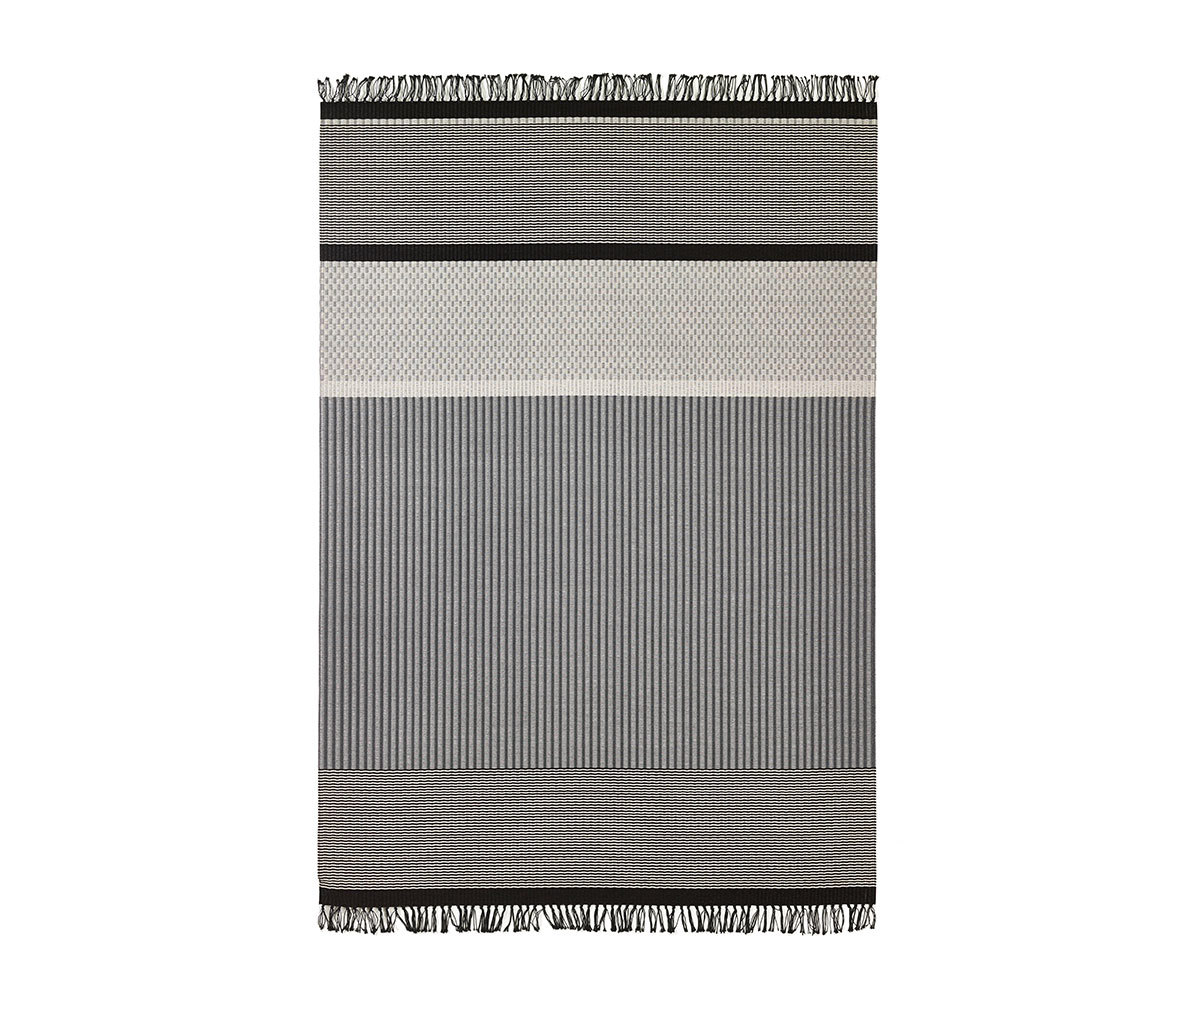 Woodnotes San Francisco -matto Light Grey/Stone, 170 x 240 cm